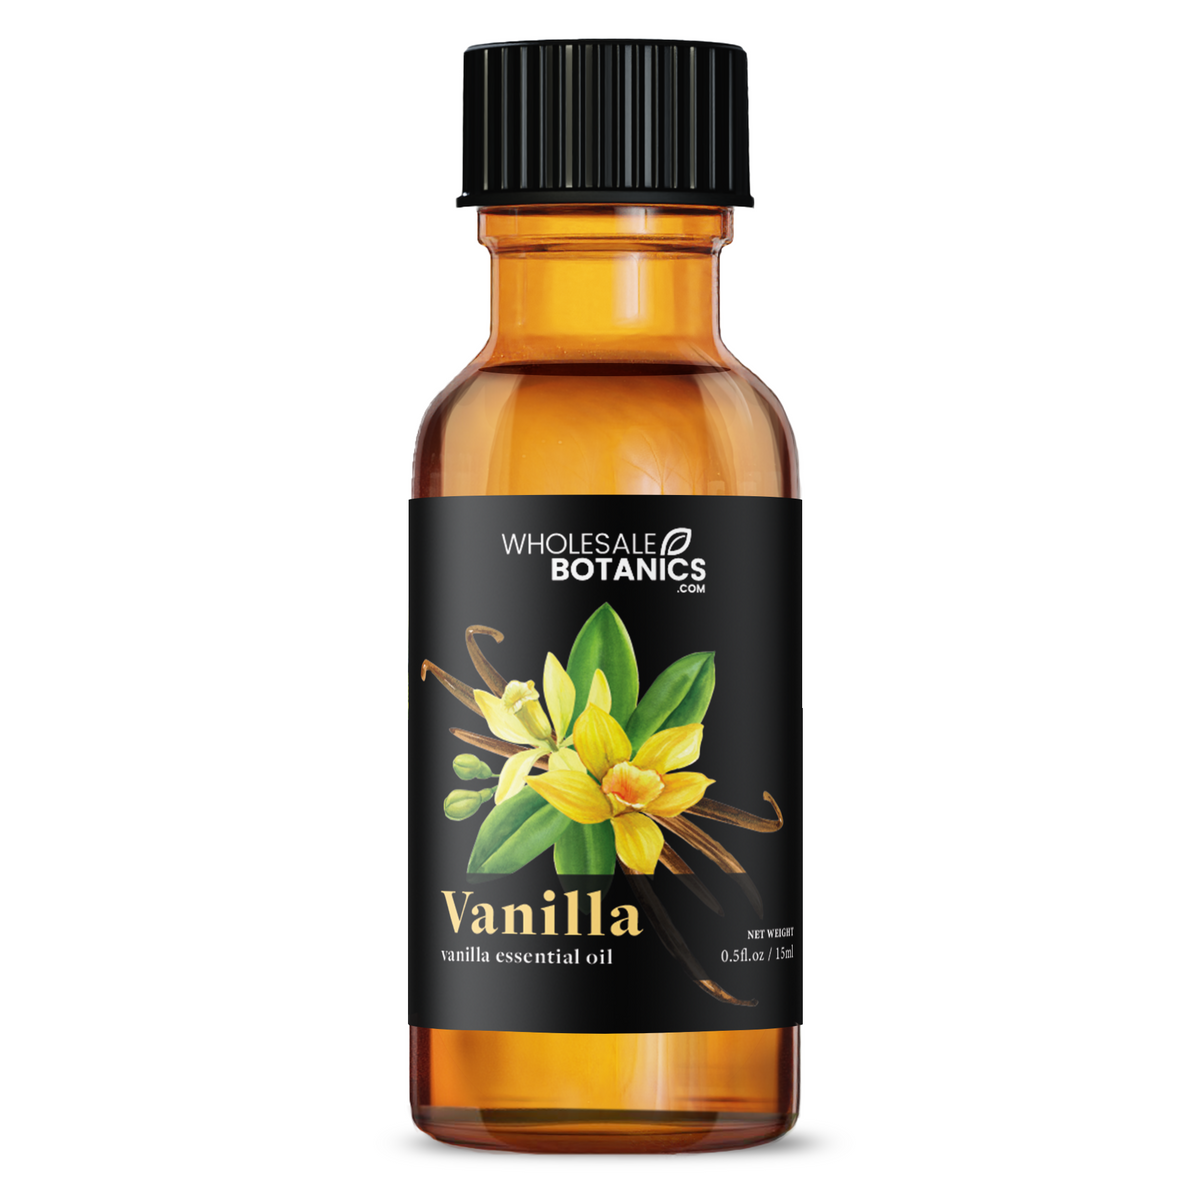 Vanilla Oil Wholesalers & Wholesale Dealers in India